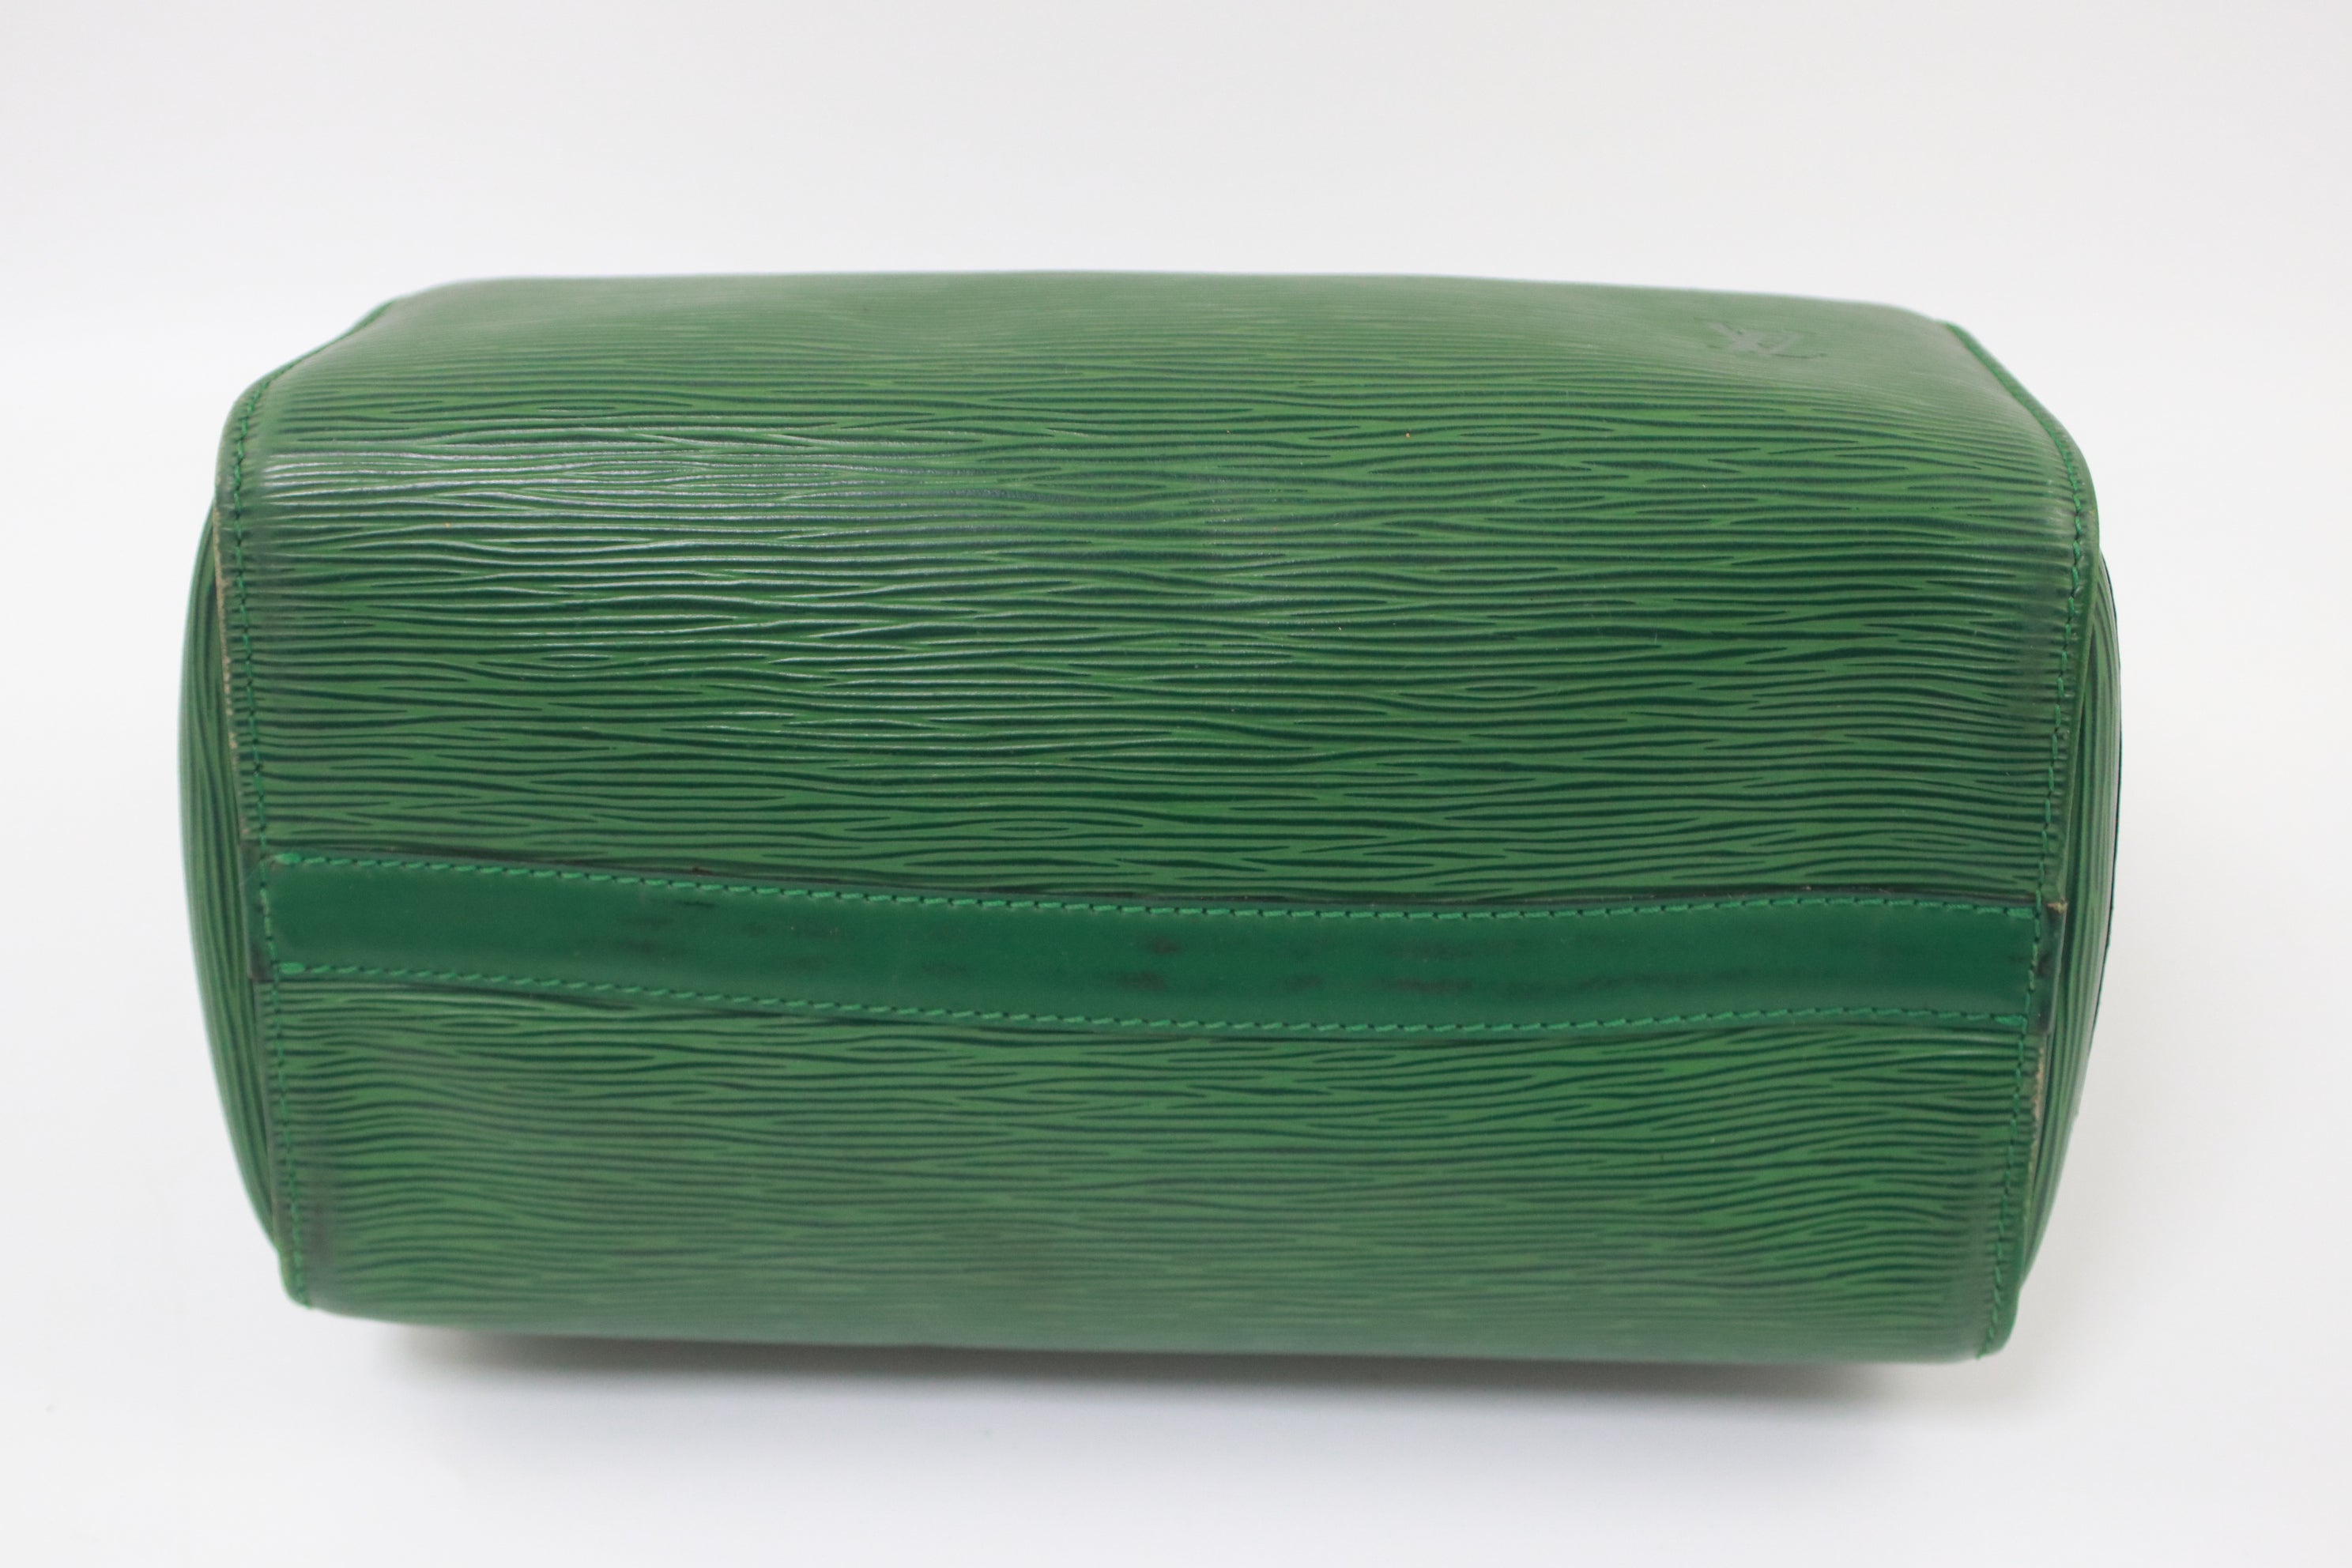 Louis Vuitton Speedy 25 Epi Green Handbag Used (6904)